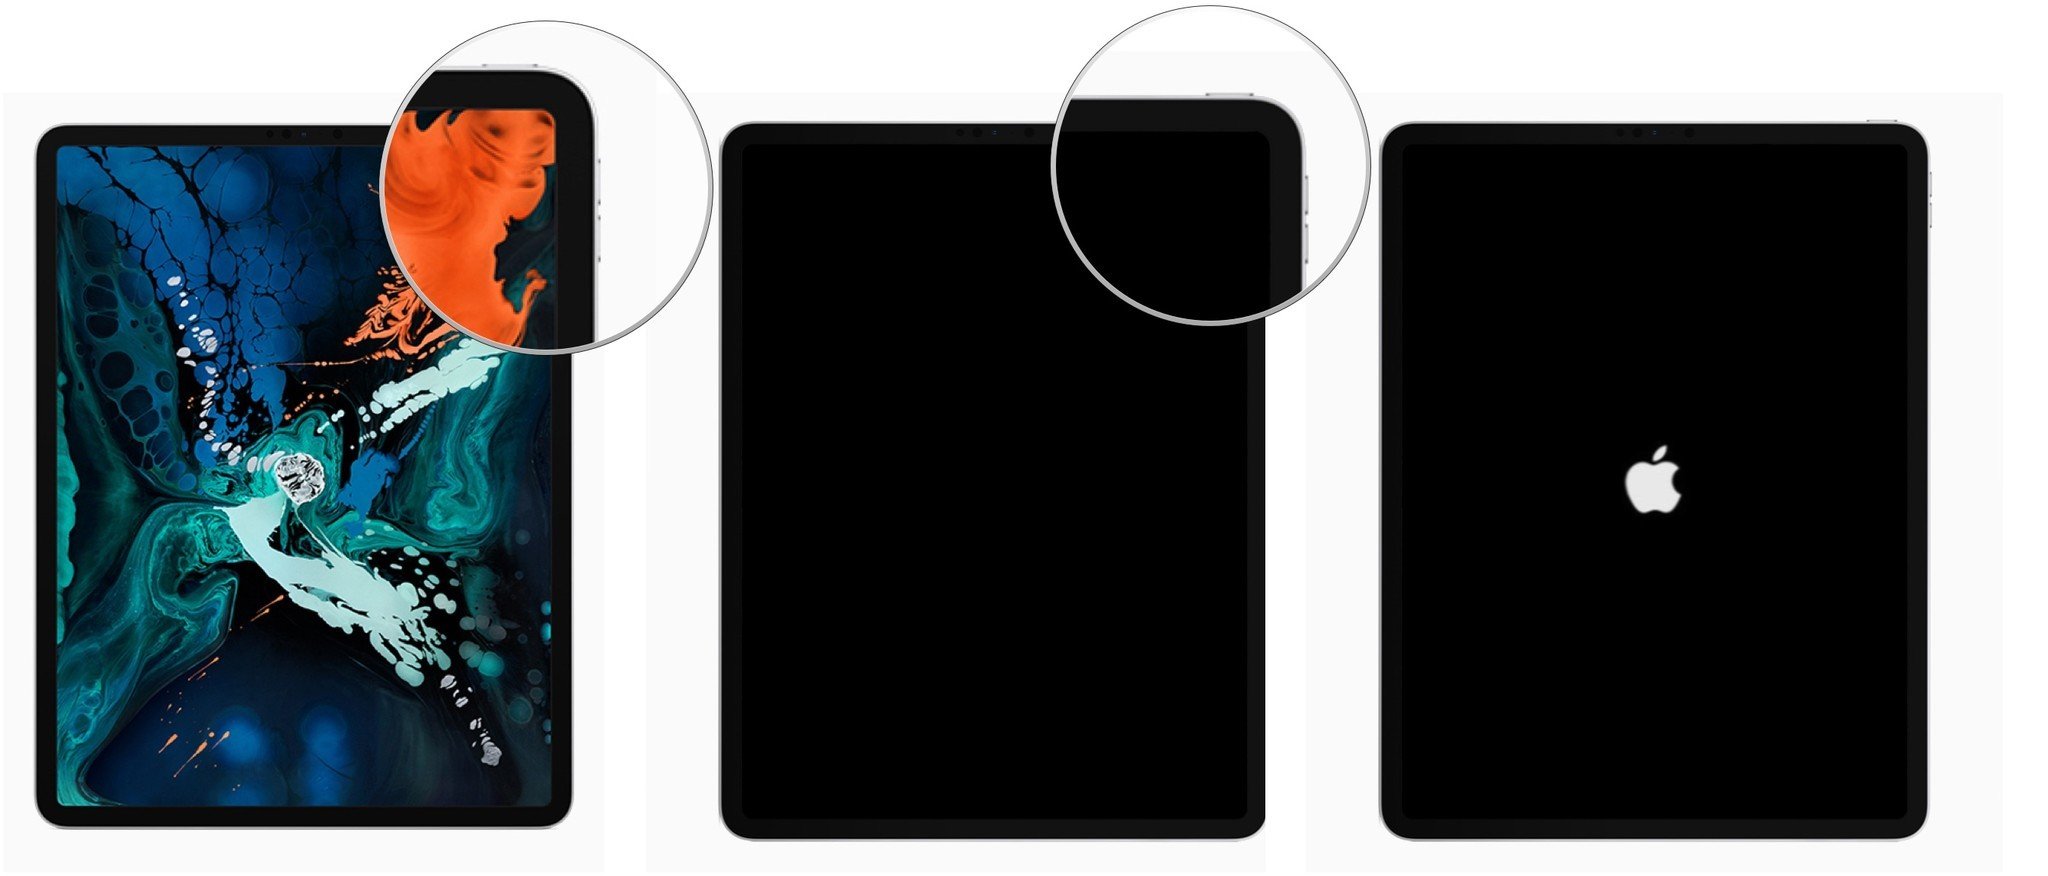 Сброс настроек iPad Pro, iPad Air или iPad mini: удерживайте кнопки, пока не появится логотип Apple.